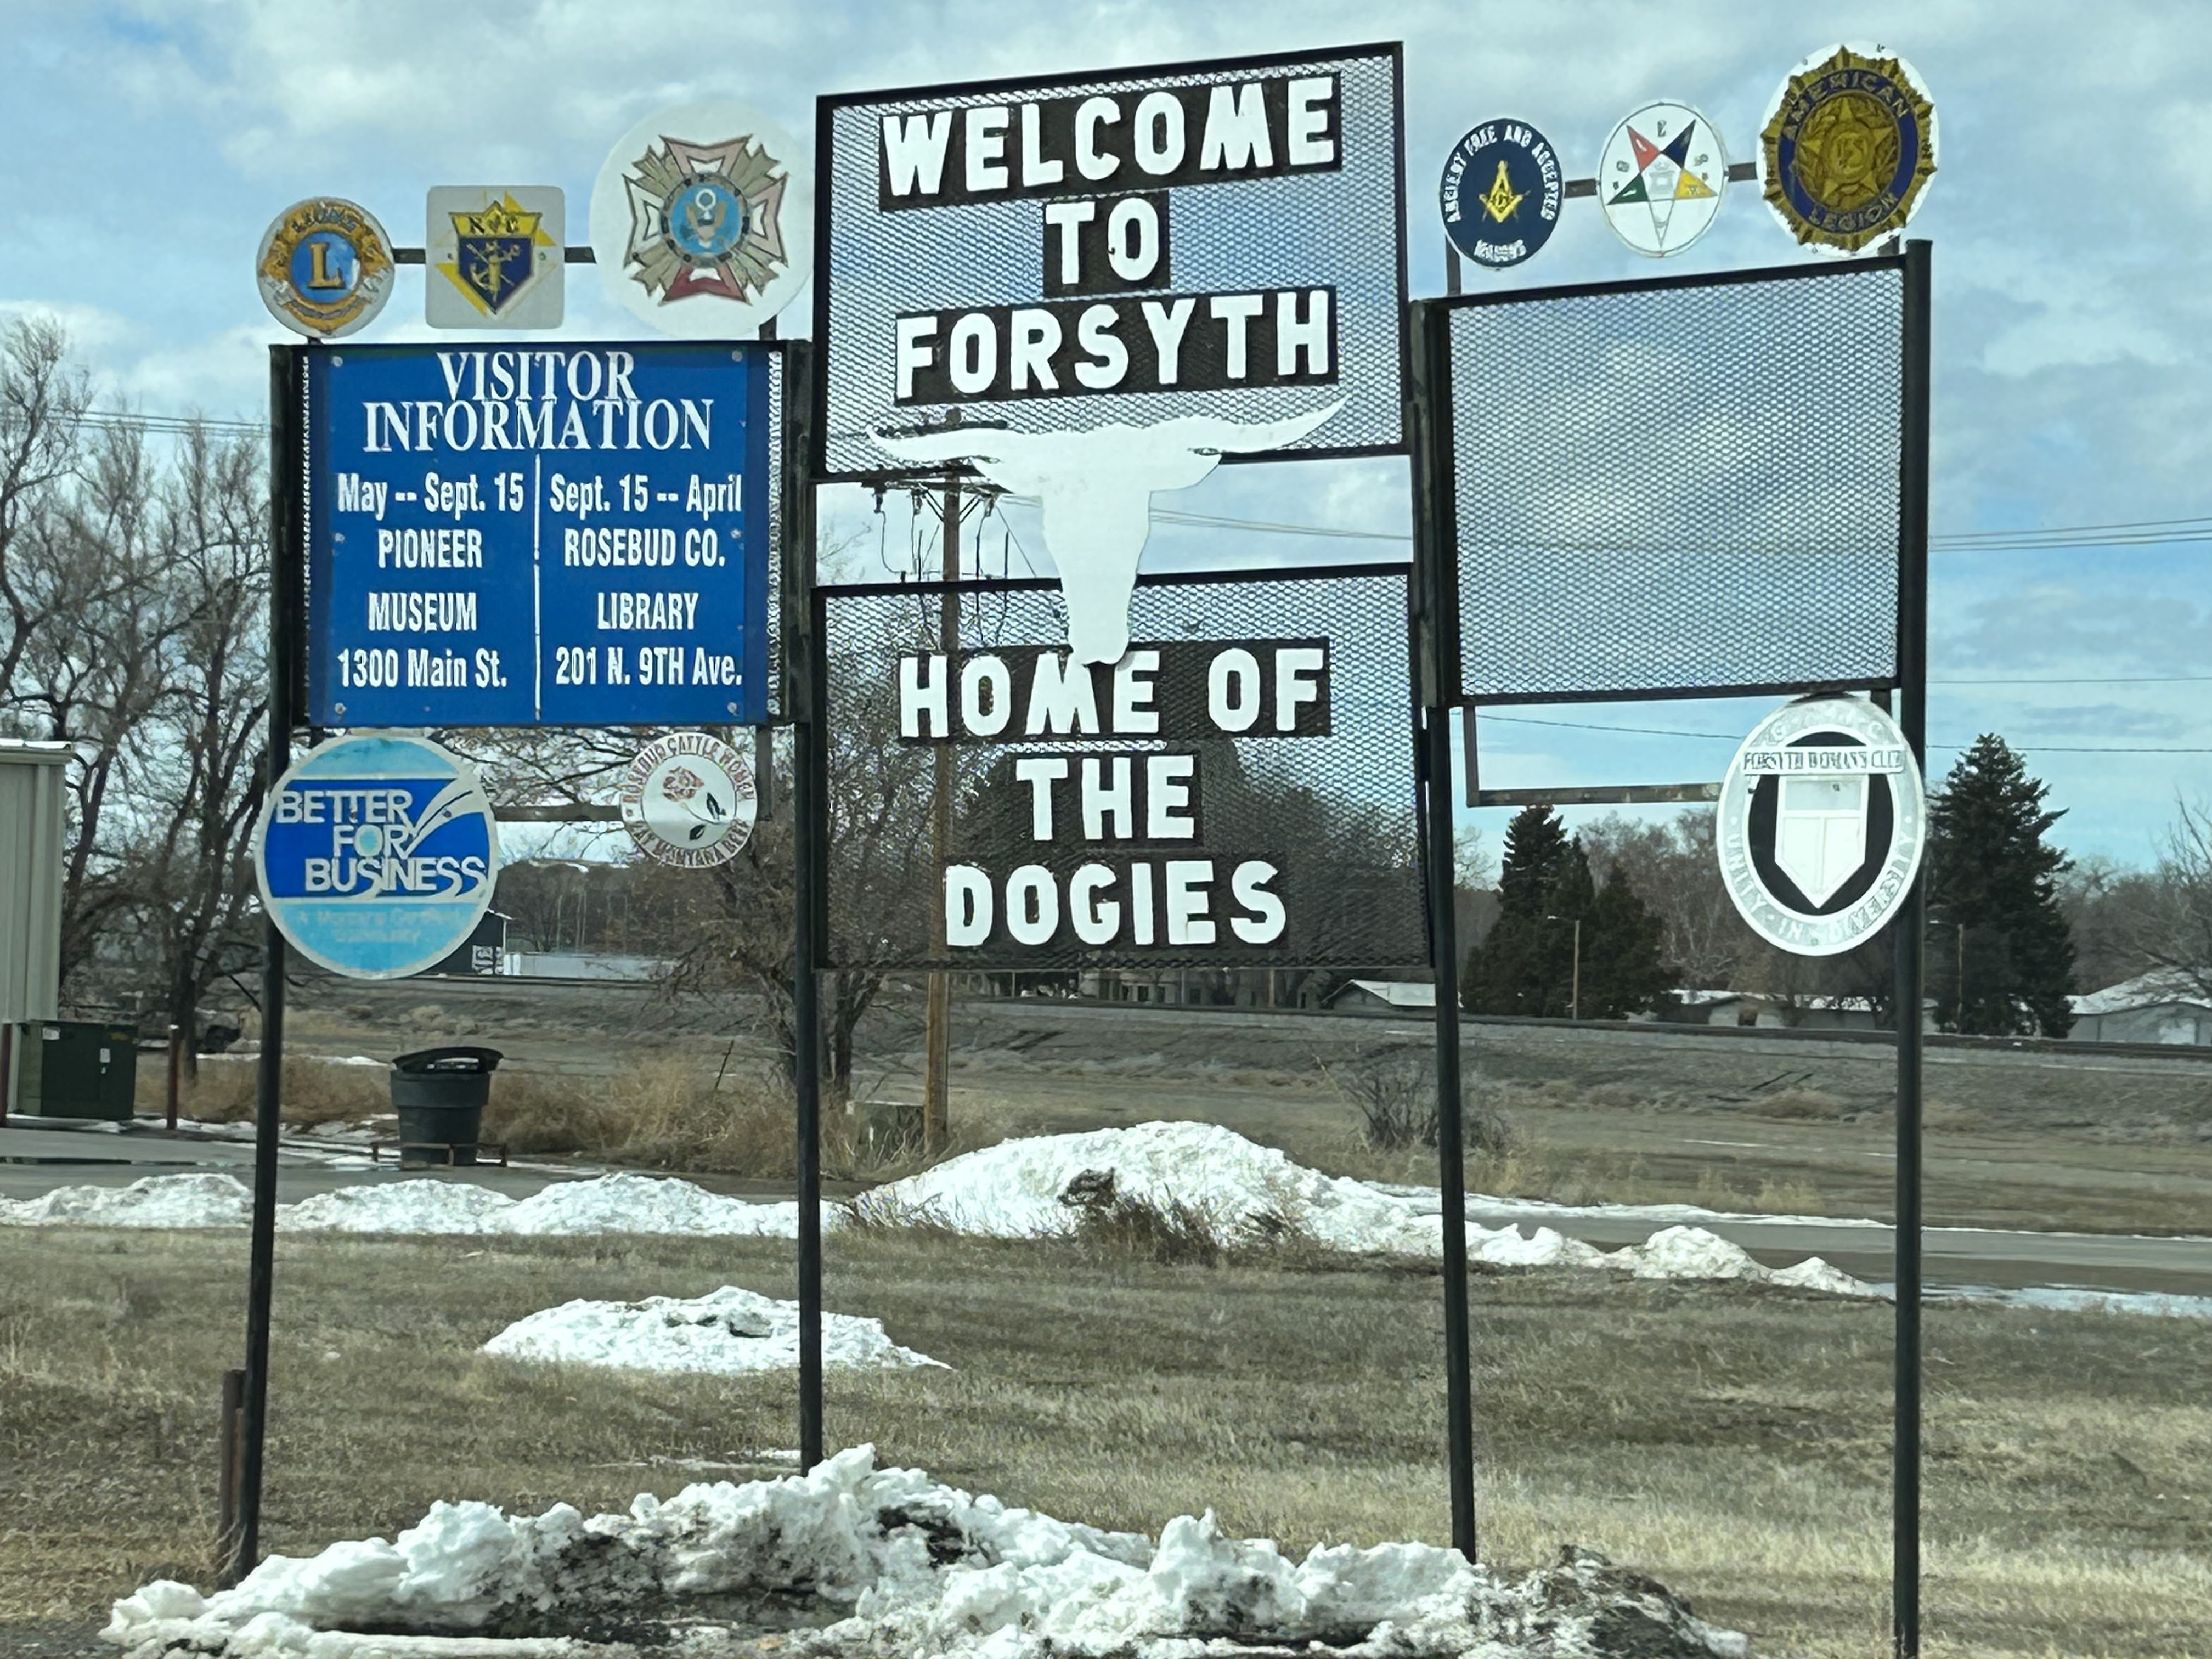 Old welcomes sign in Forsyth, MT.